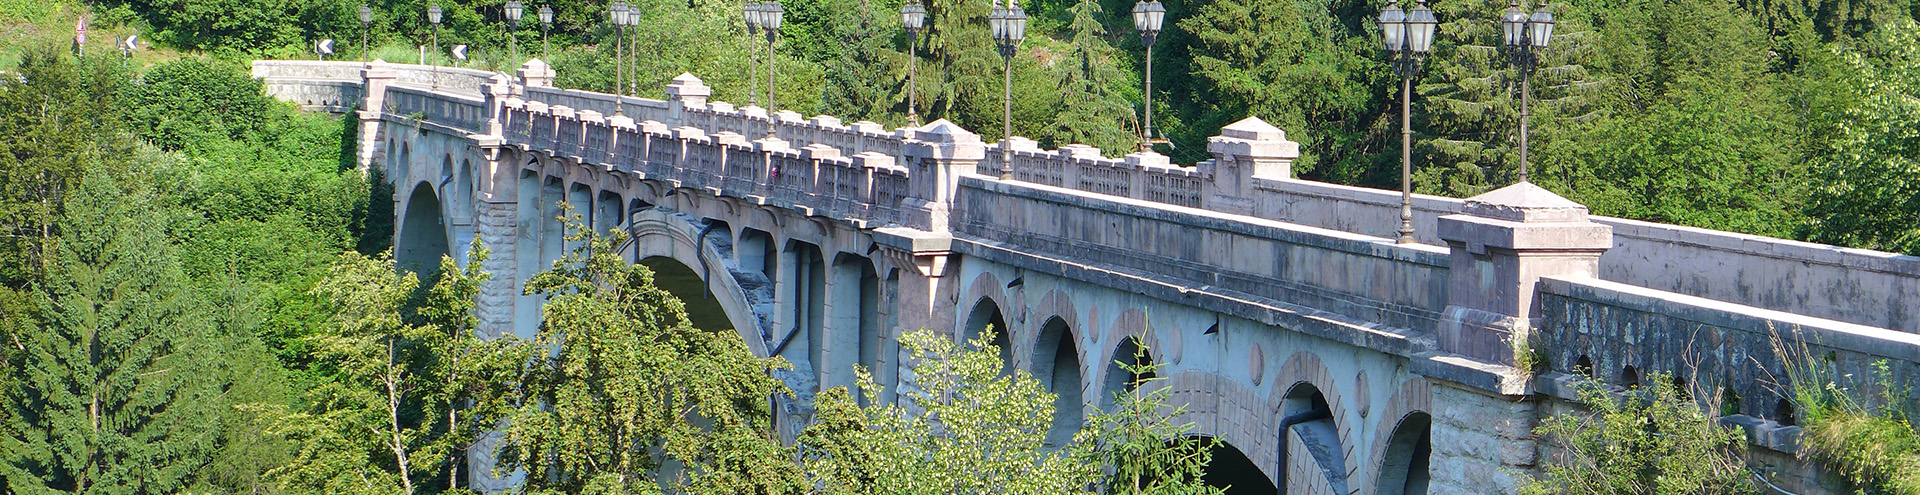 Brücke von Roana, Foto: CKB